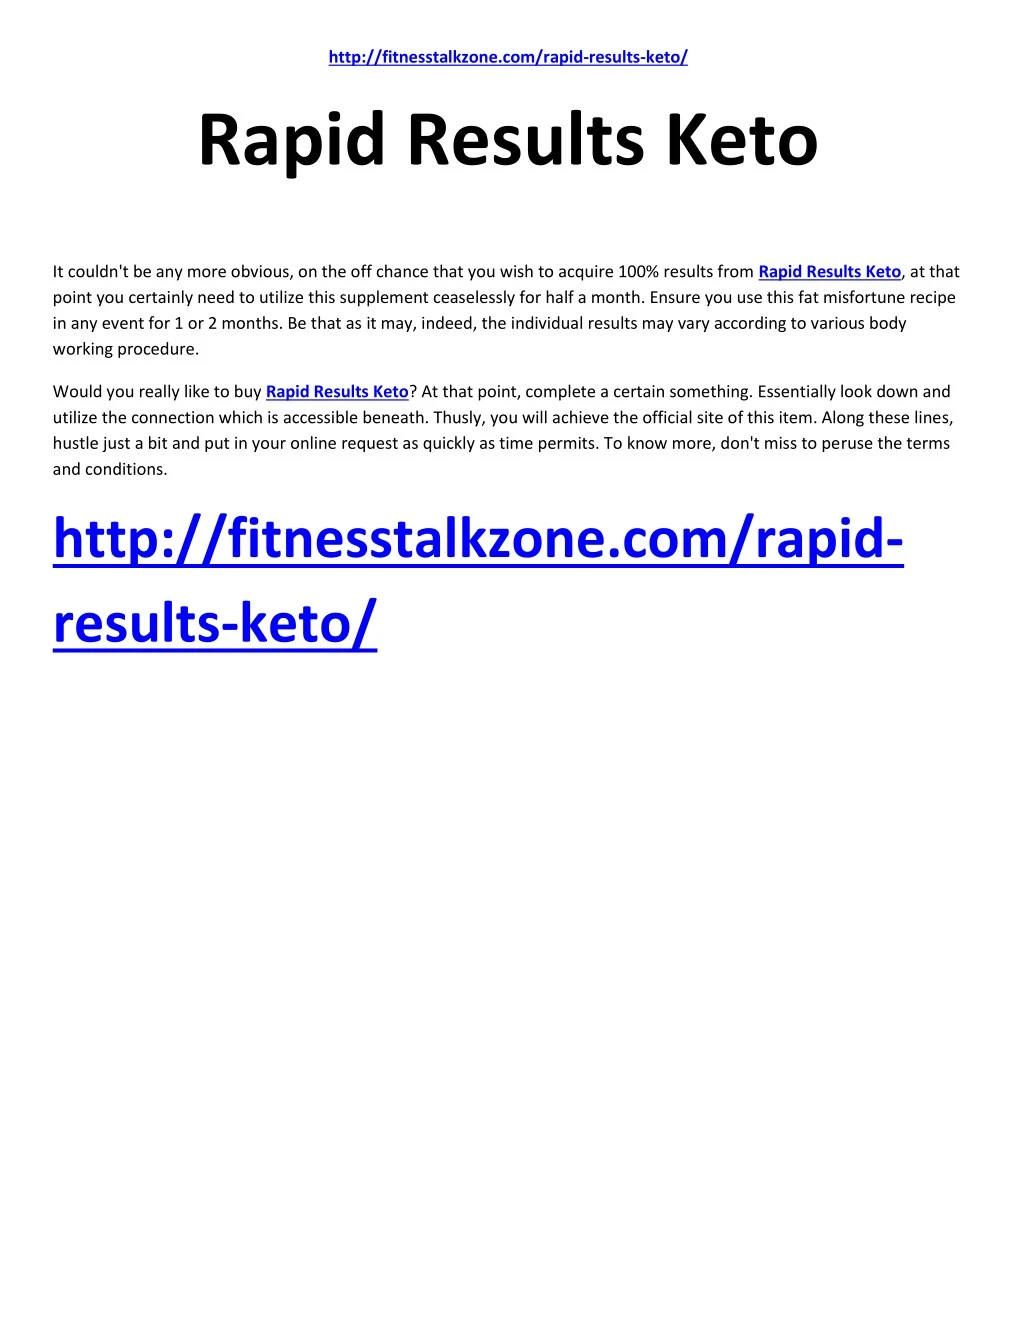 http fitnesstalkzone com rapid results keto rapid n.